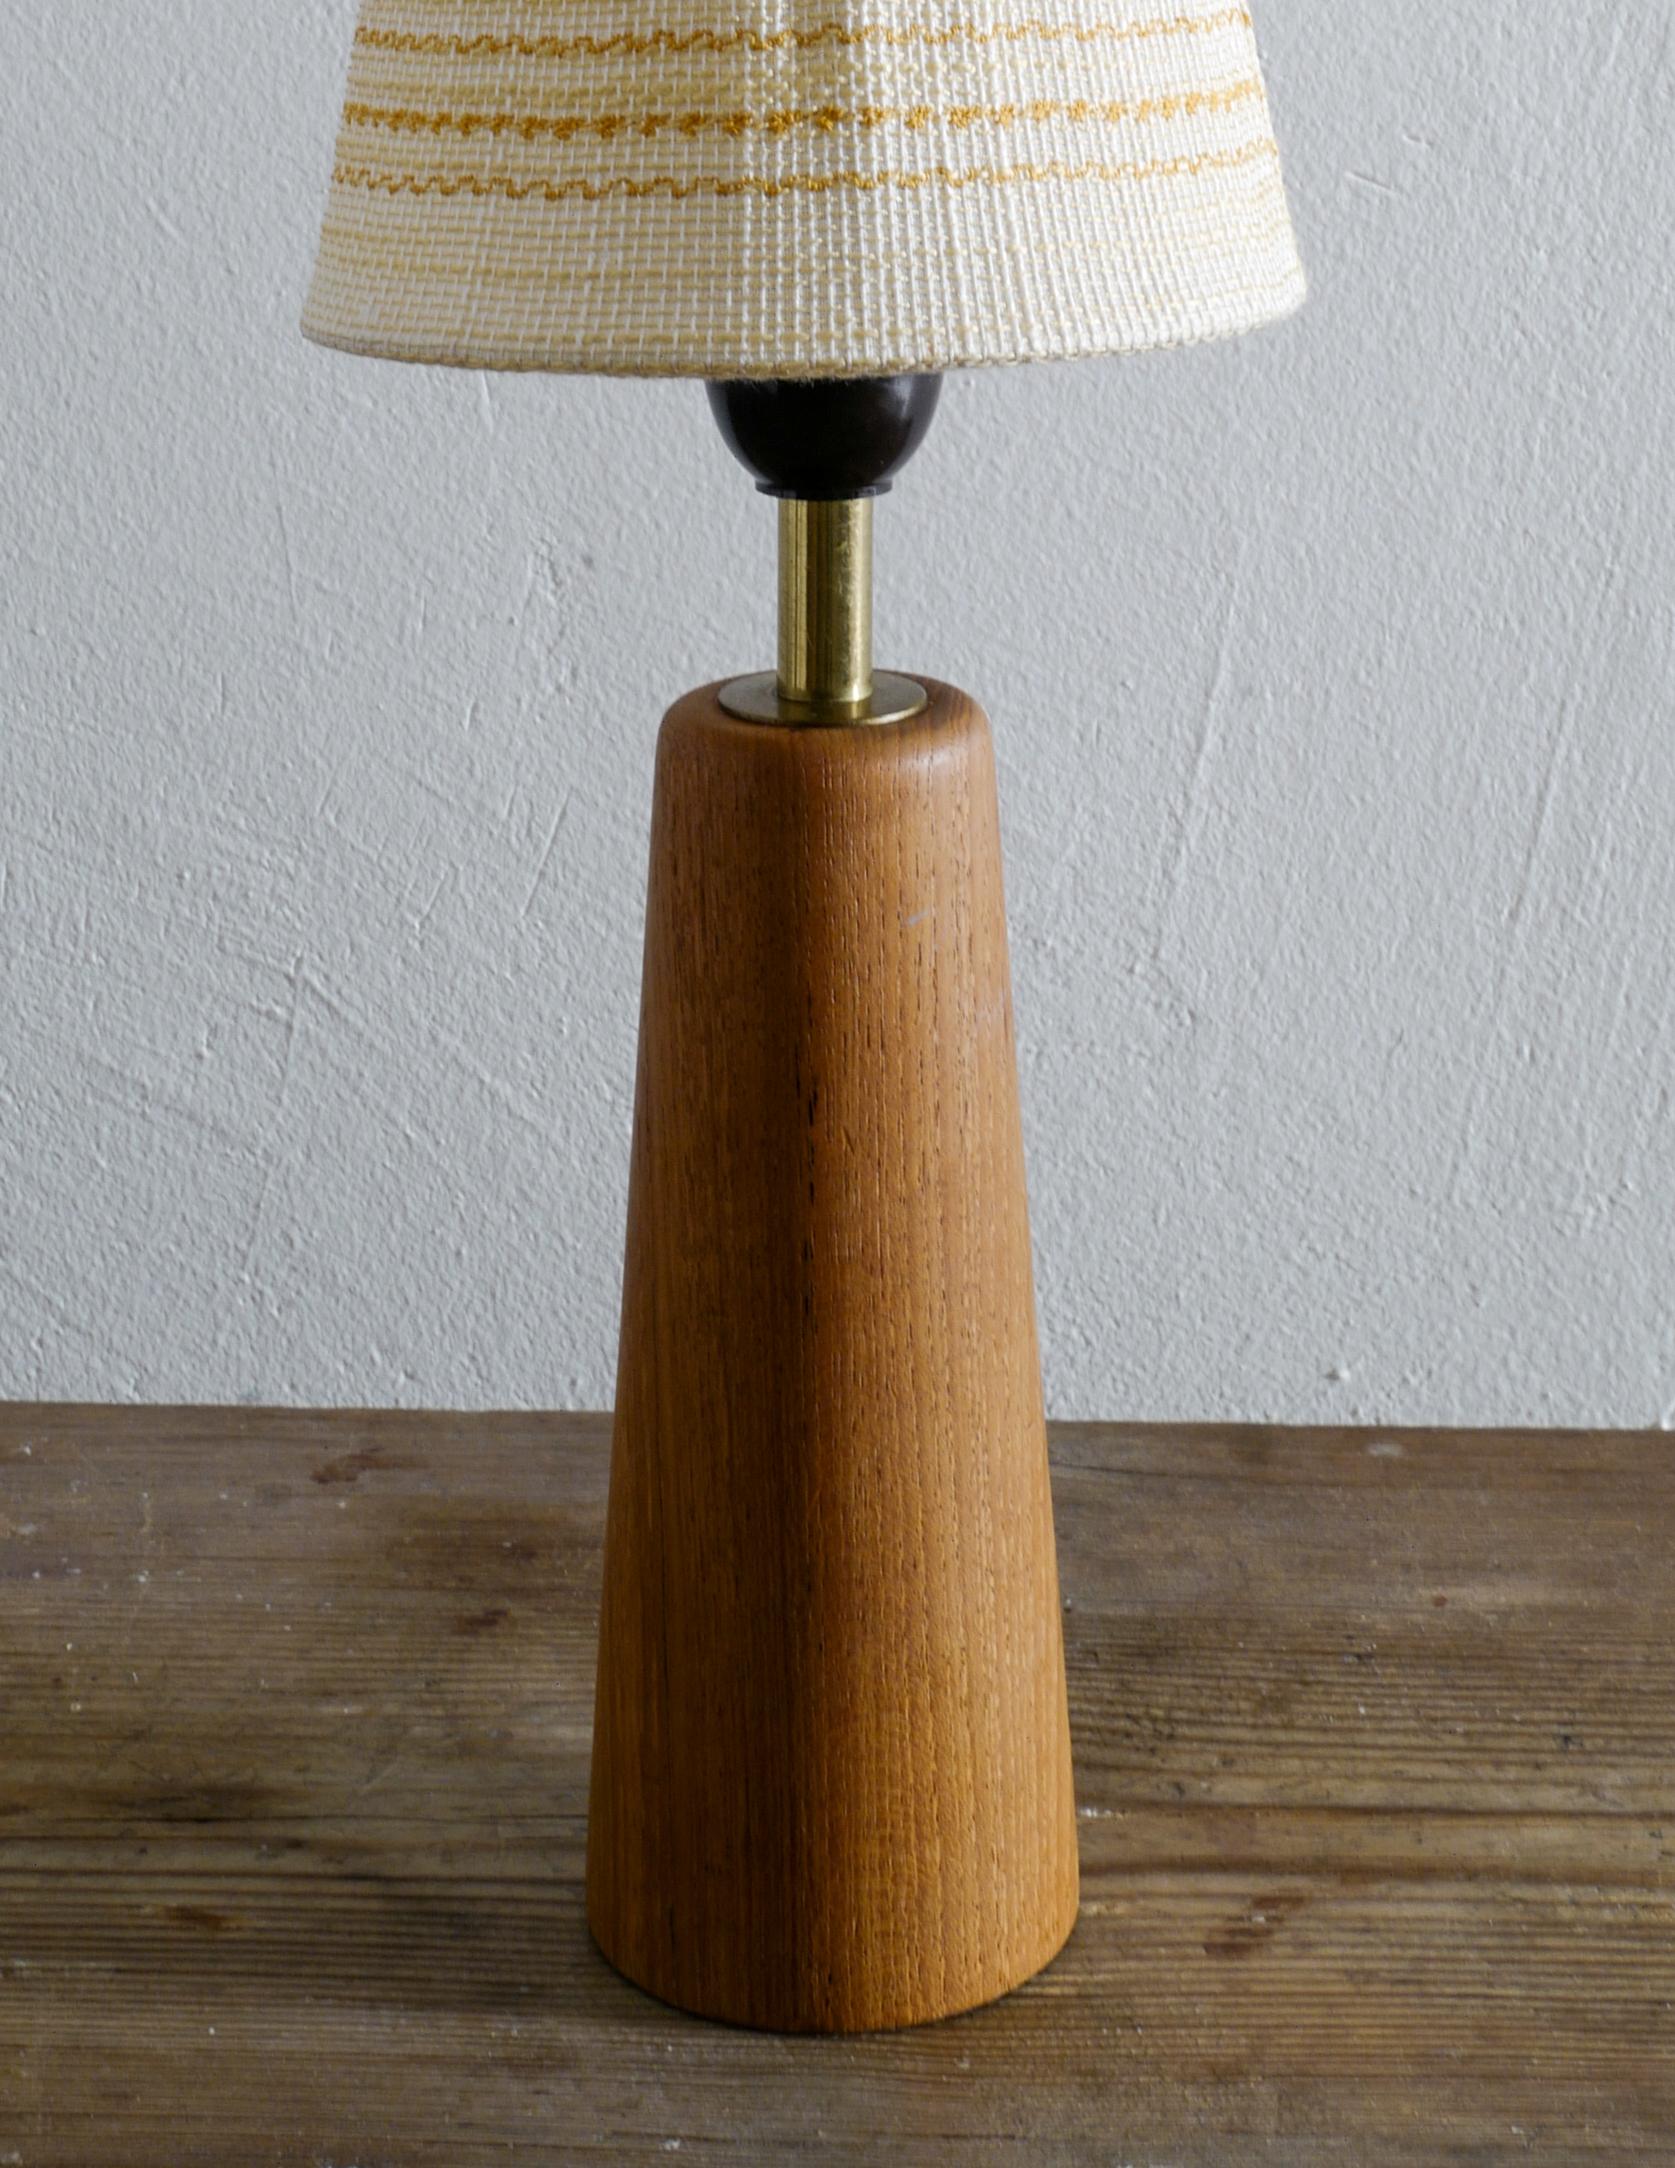 Scandinavian Modern Teak Table Lamp by Lisa Johansson-Pape, Finland, ca 1950s